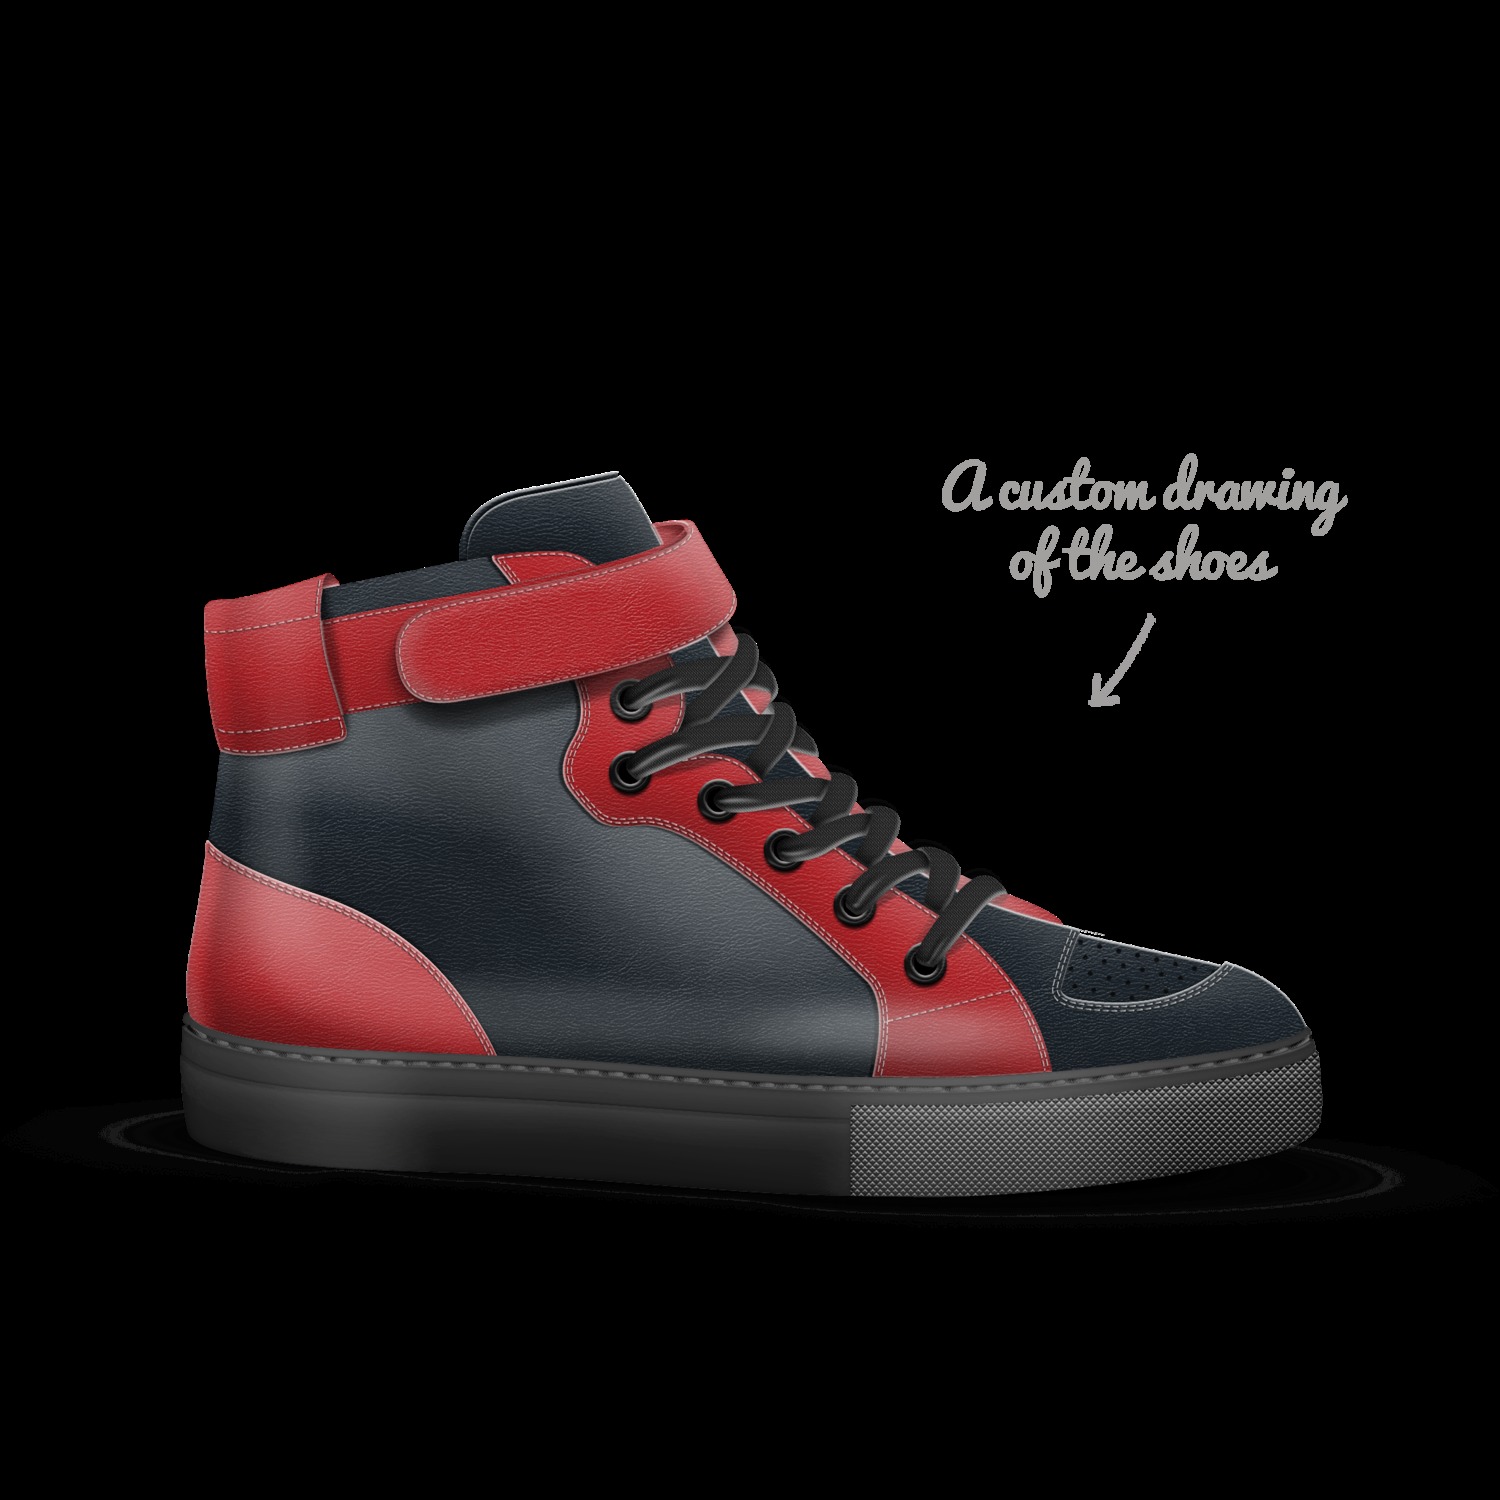 A Custom Shoe concept by David Thomas